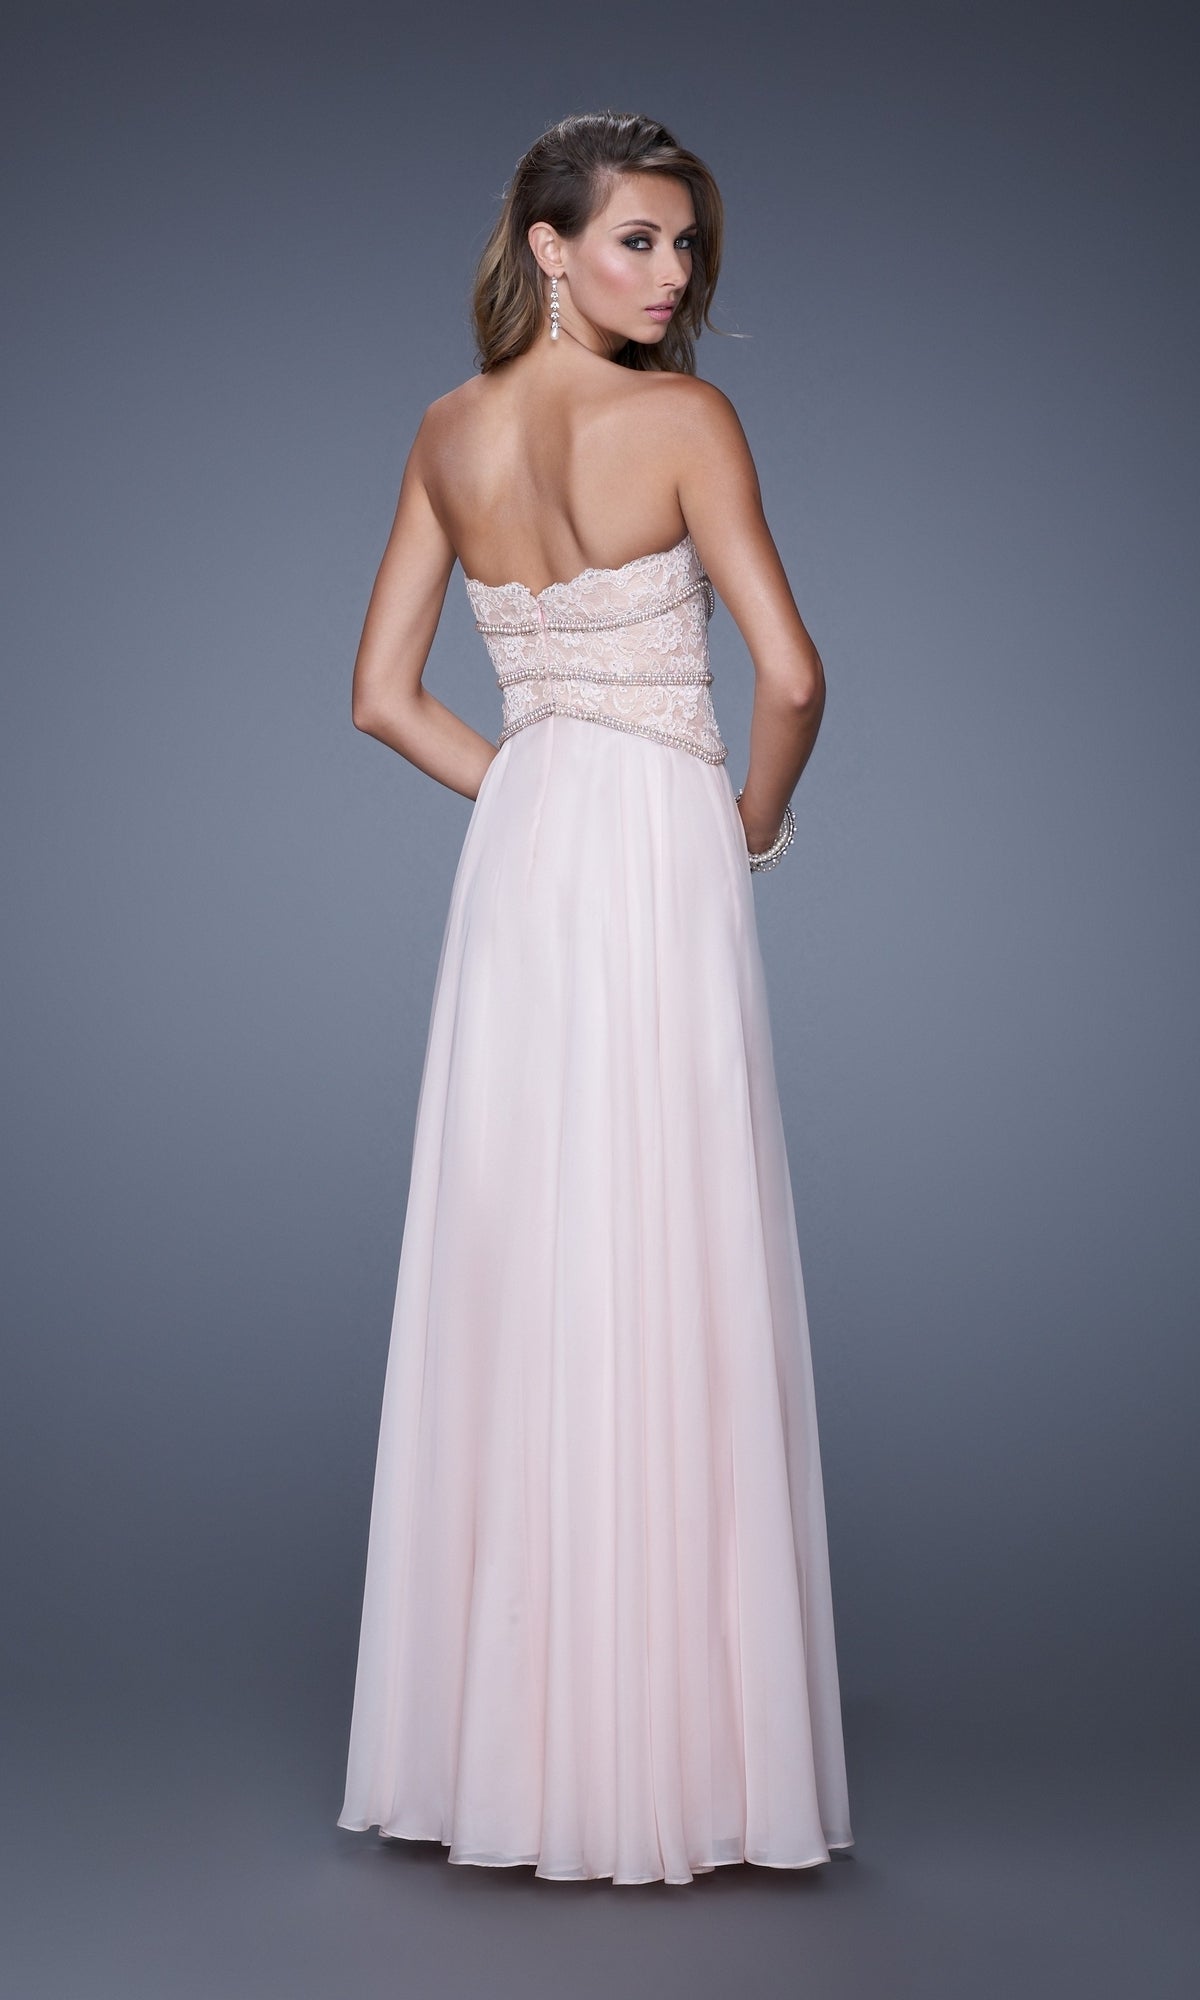 Strapless Chiffon Prom Dress with Lace Bodice